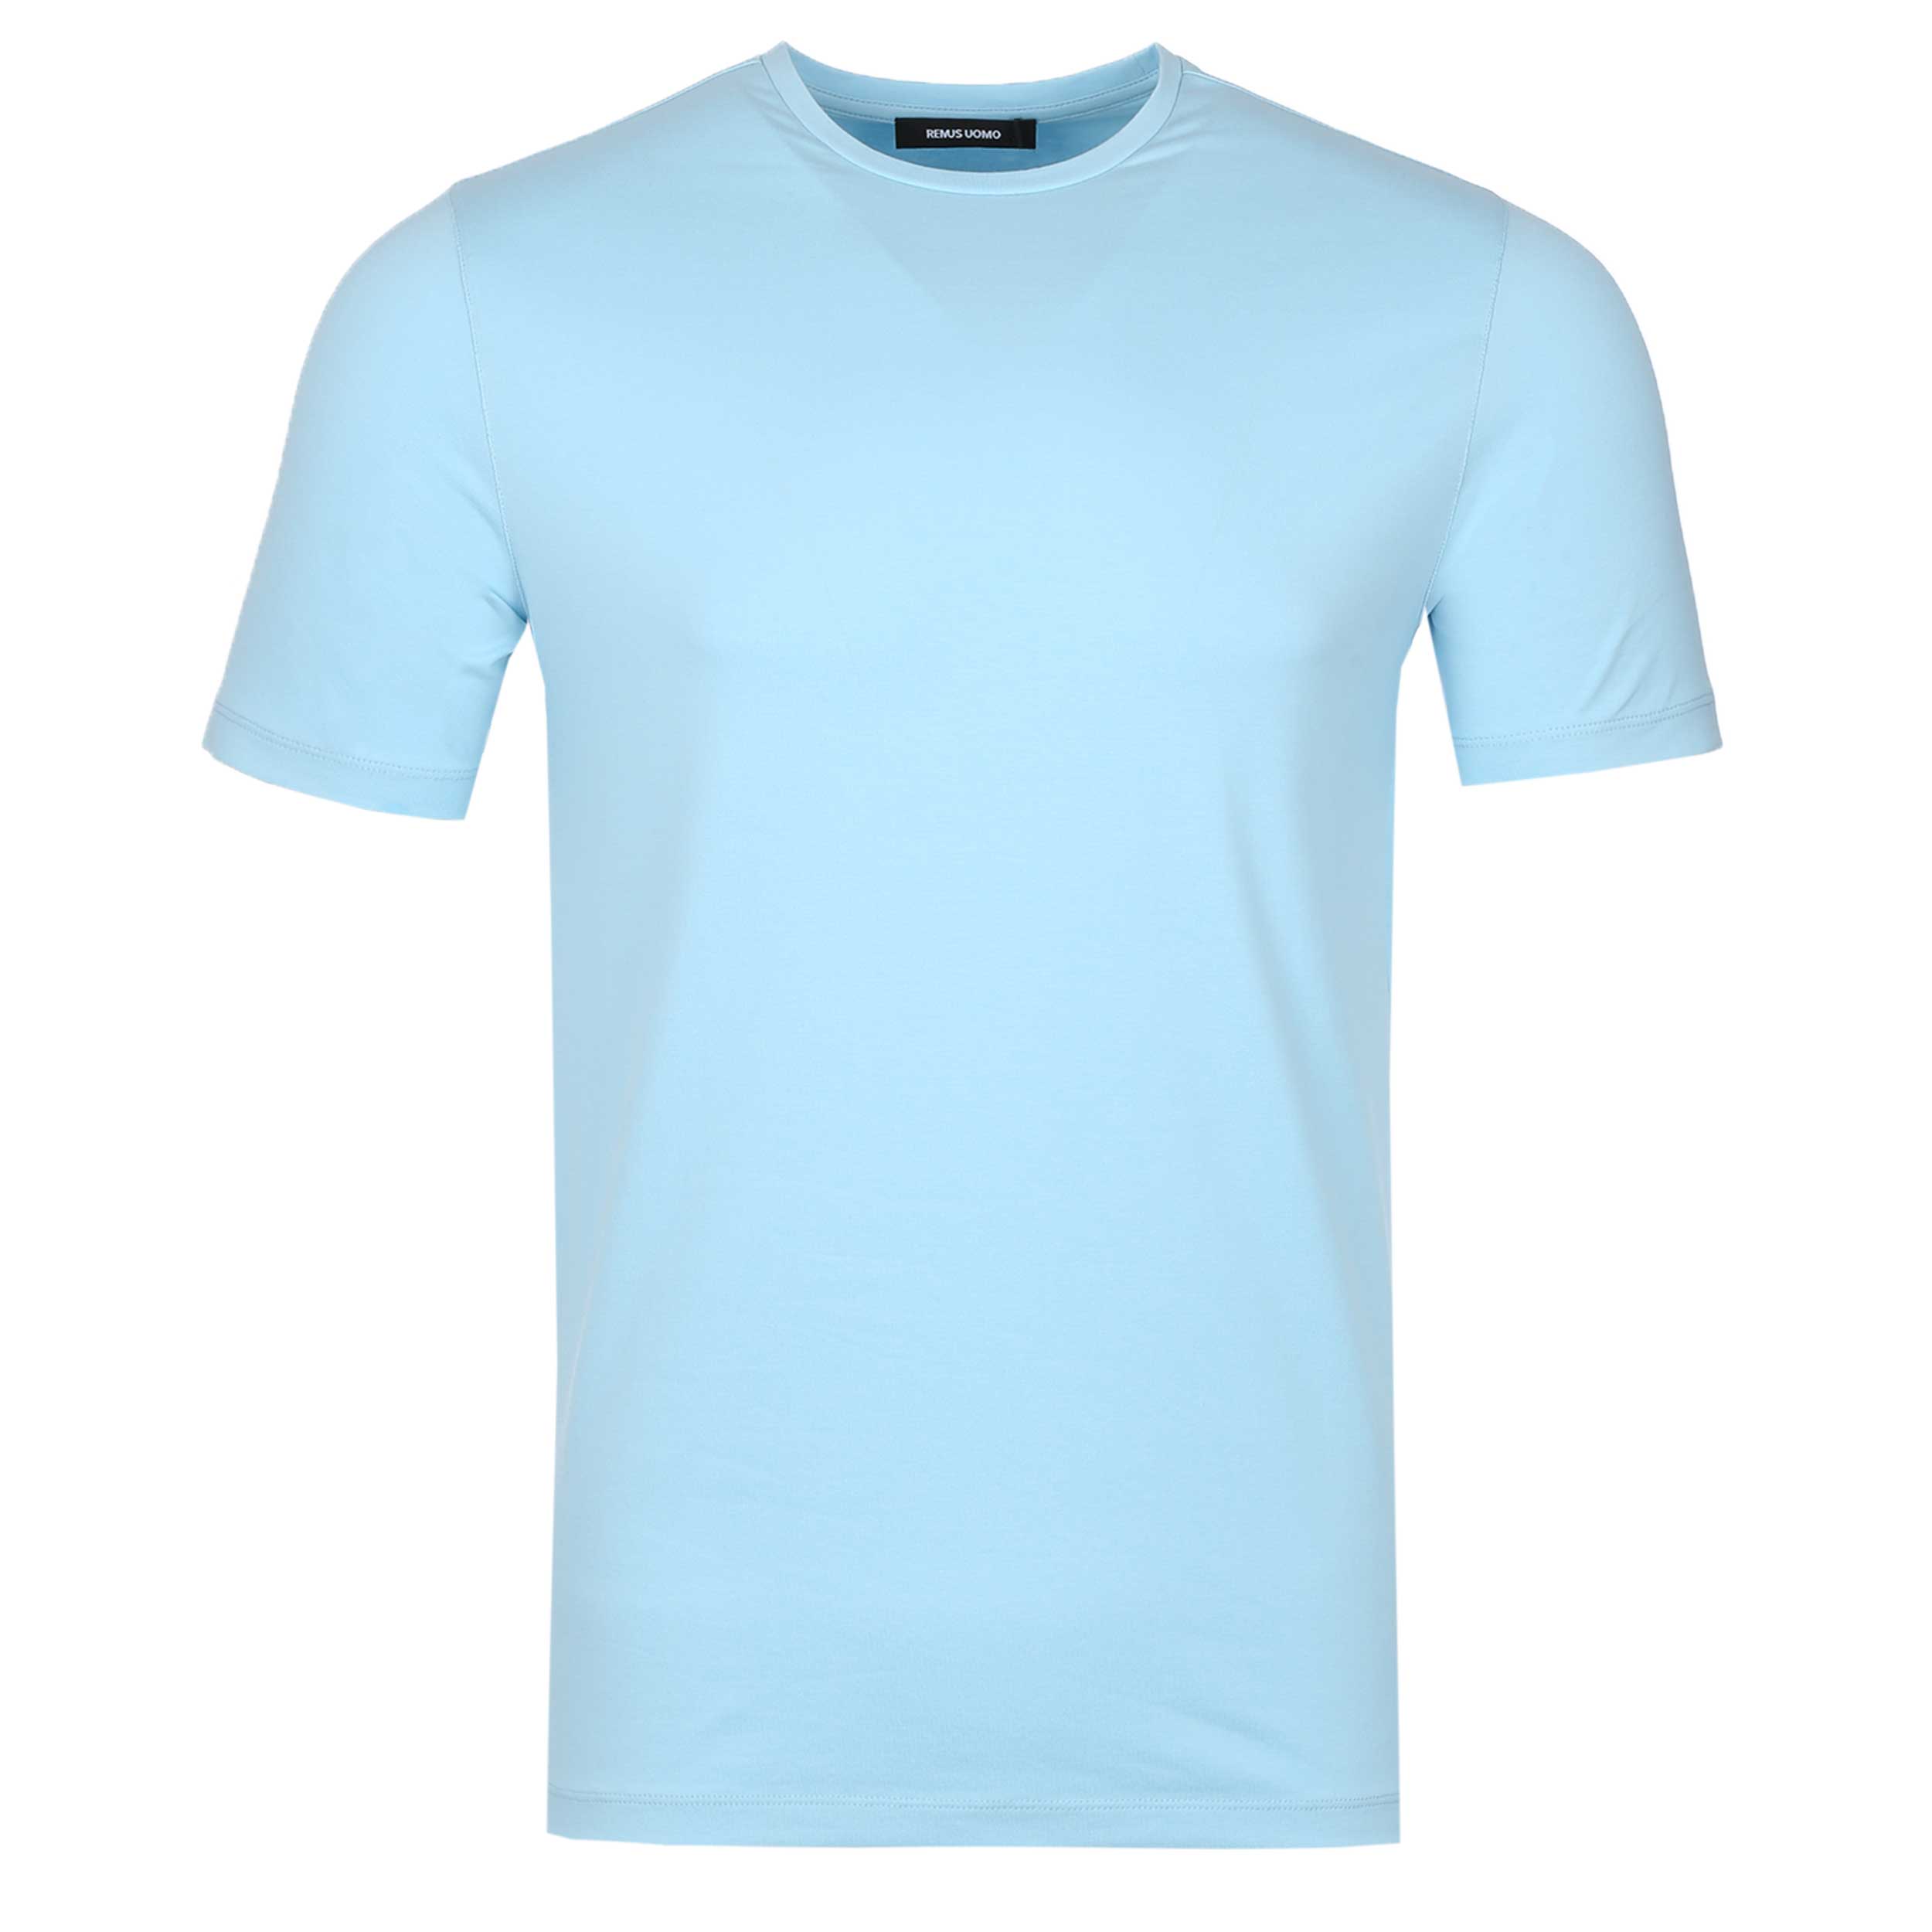 Remus Uomo Basic Crew Neck T Shirt in Sky Blue